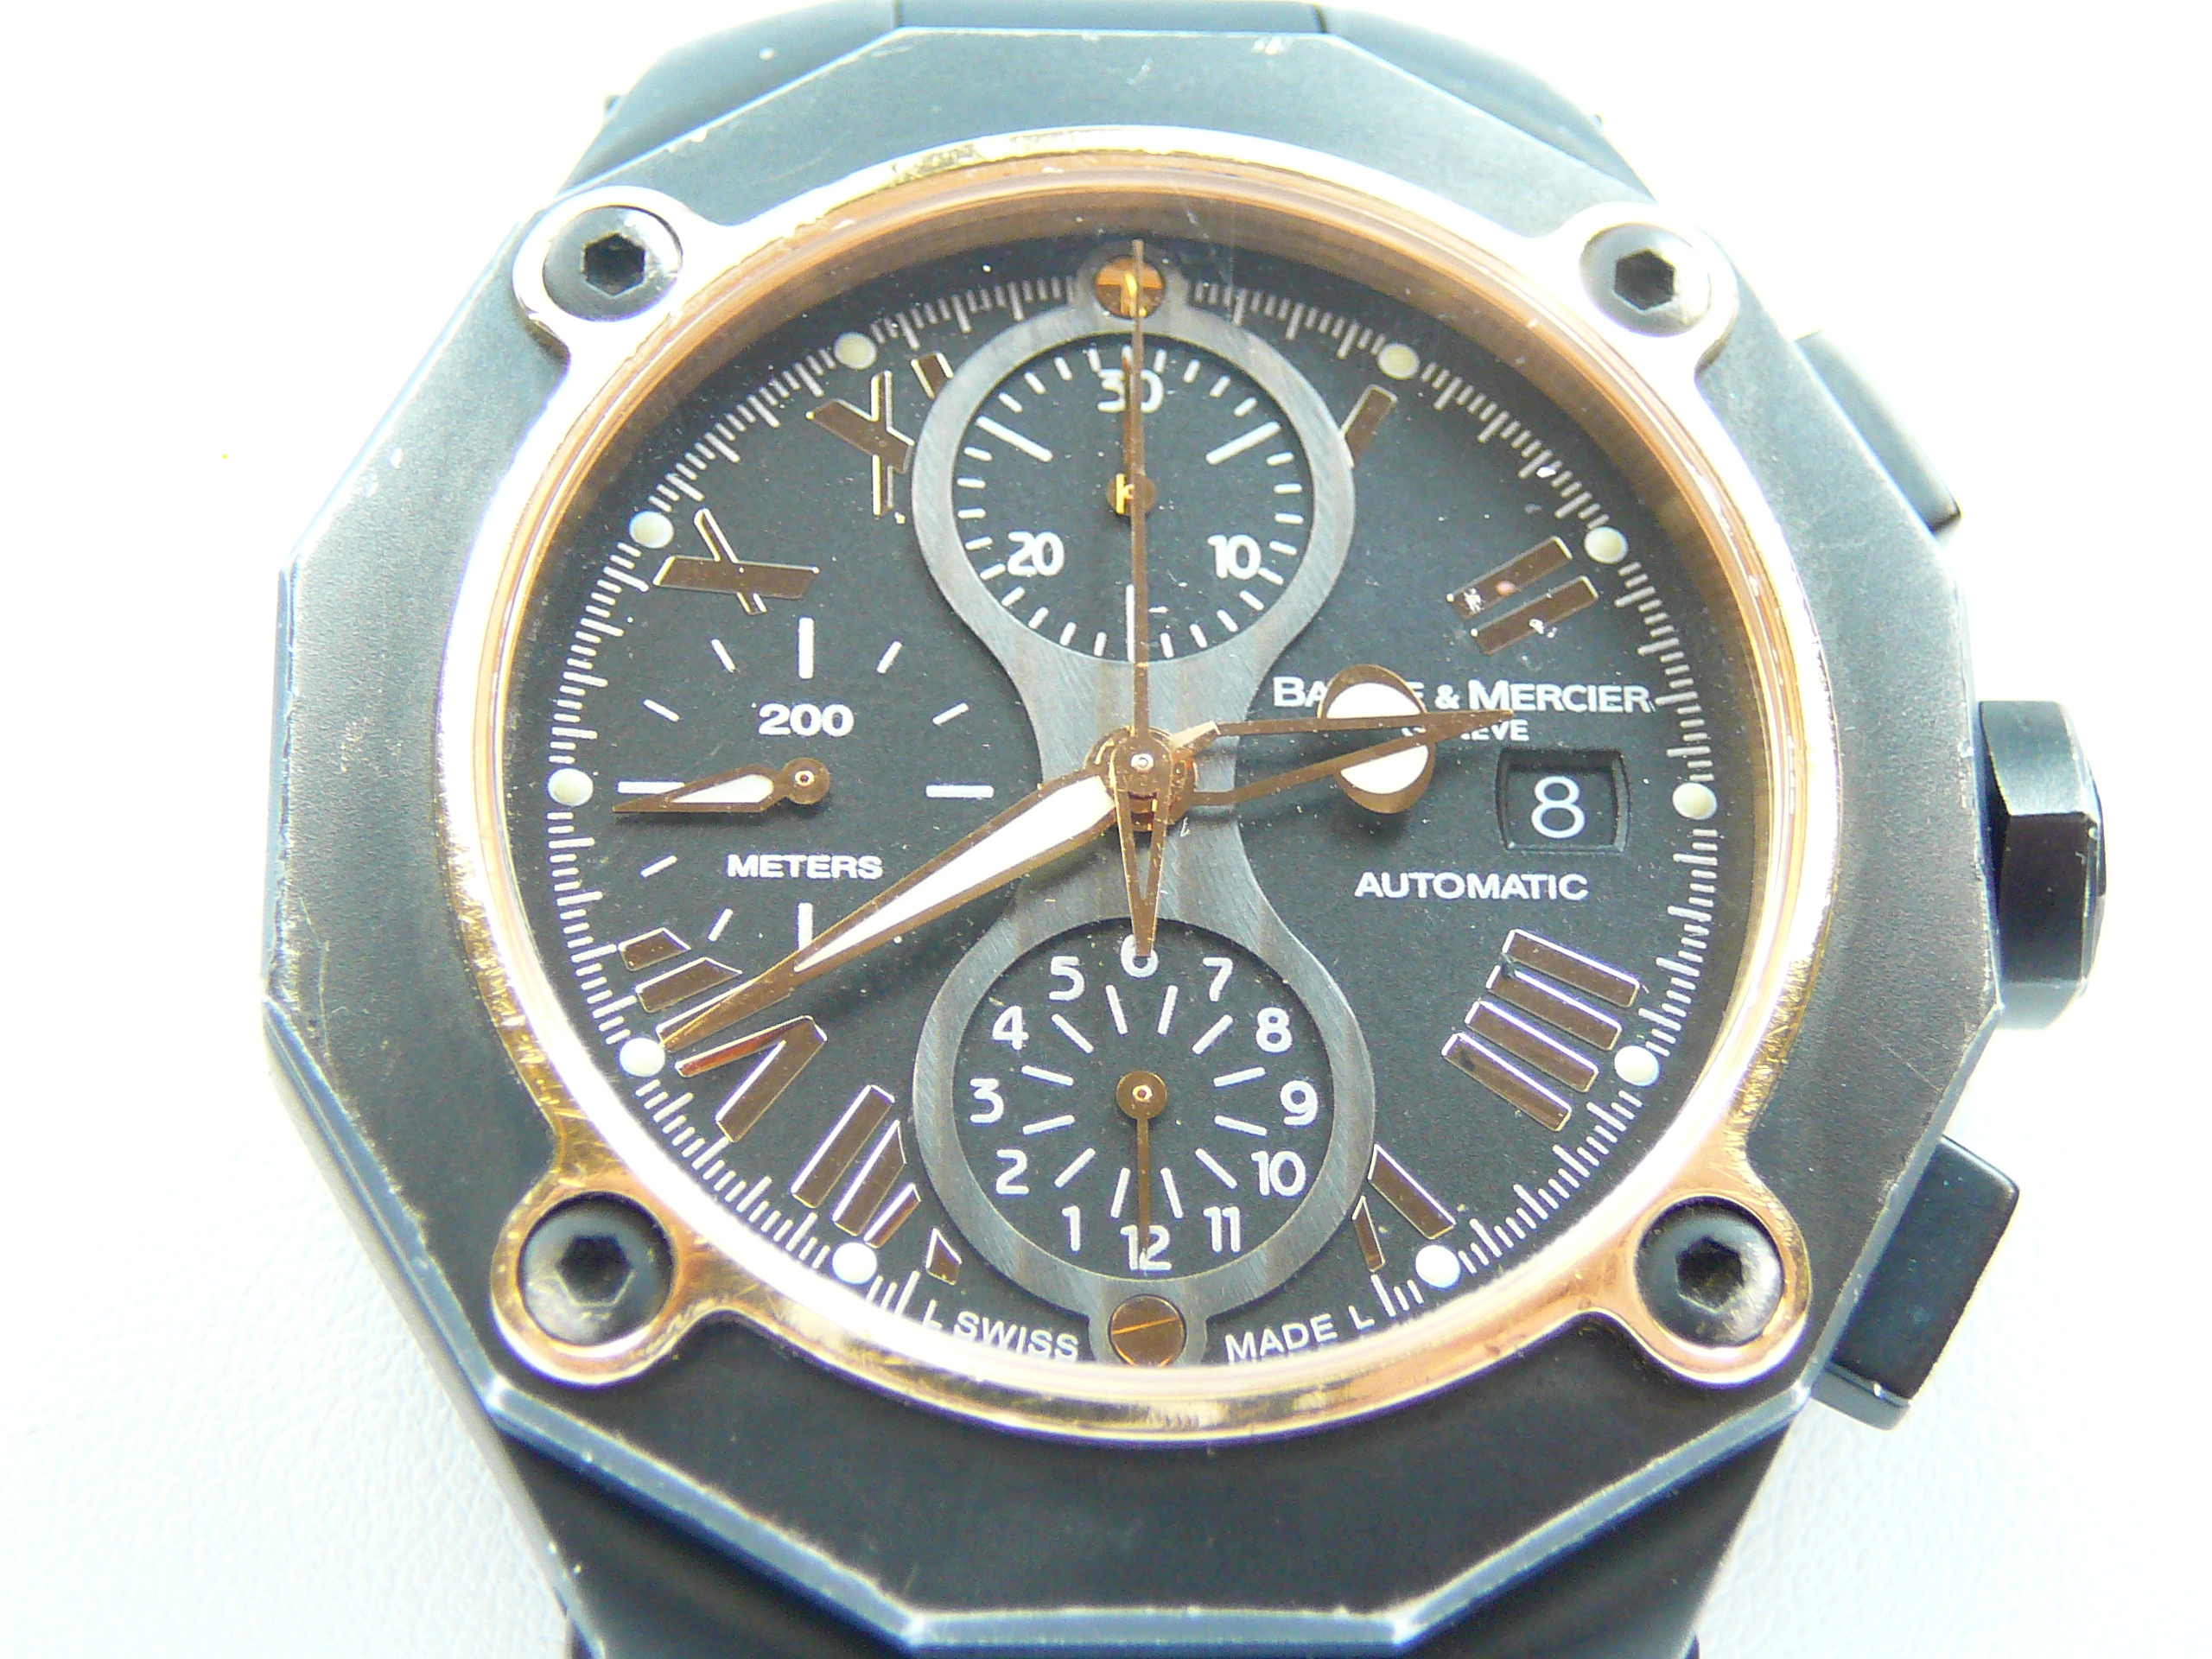 Gents Baume & Mercier wrist watch - Image 2 of 4